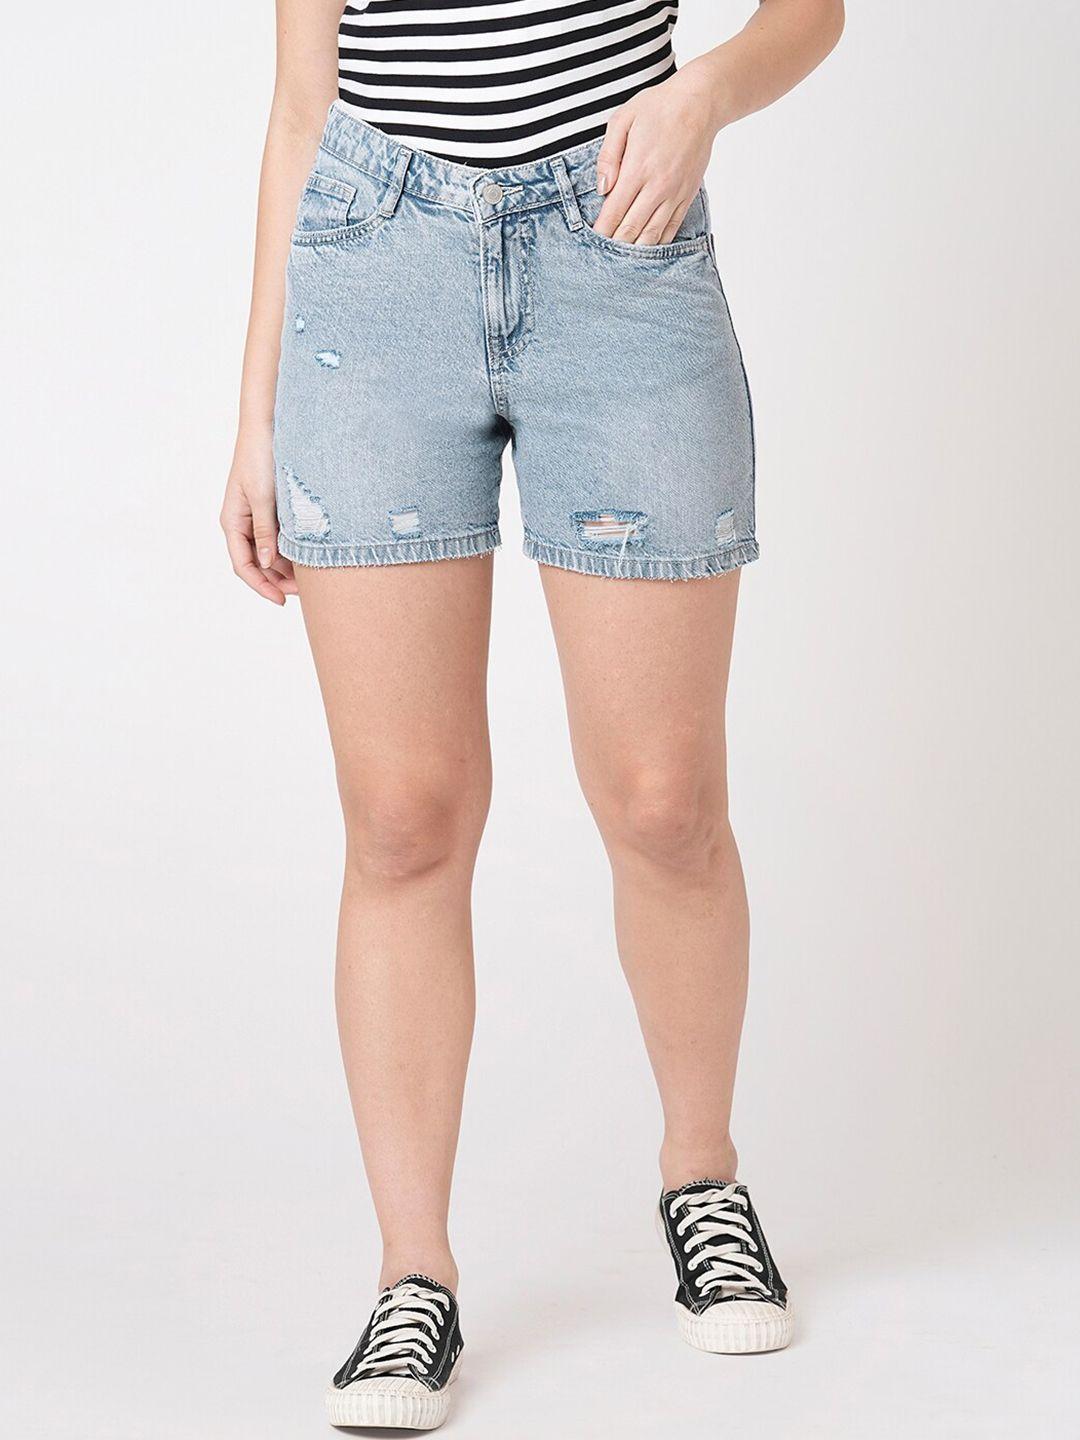 kraus jeans women washed slim fit high-rise cotton denim shorts technology